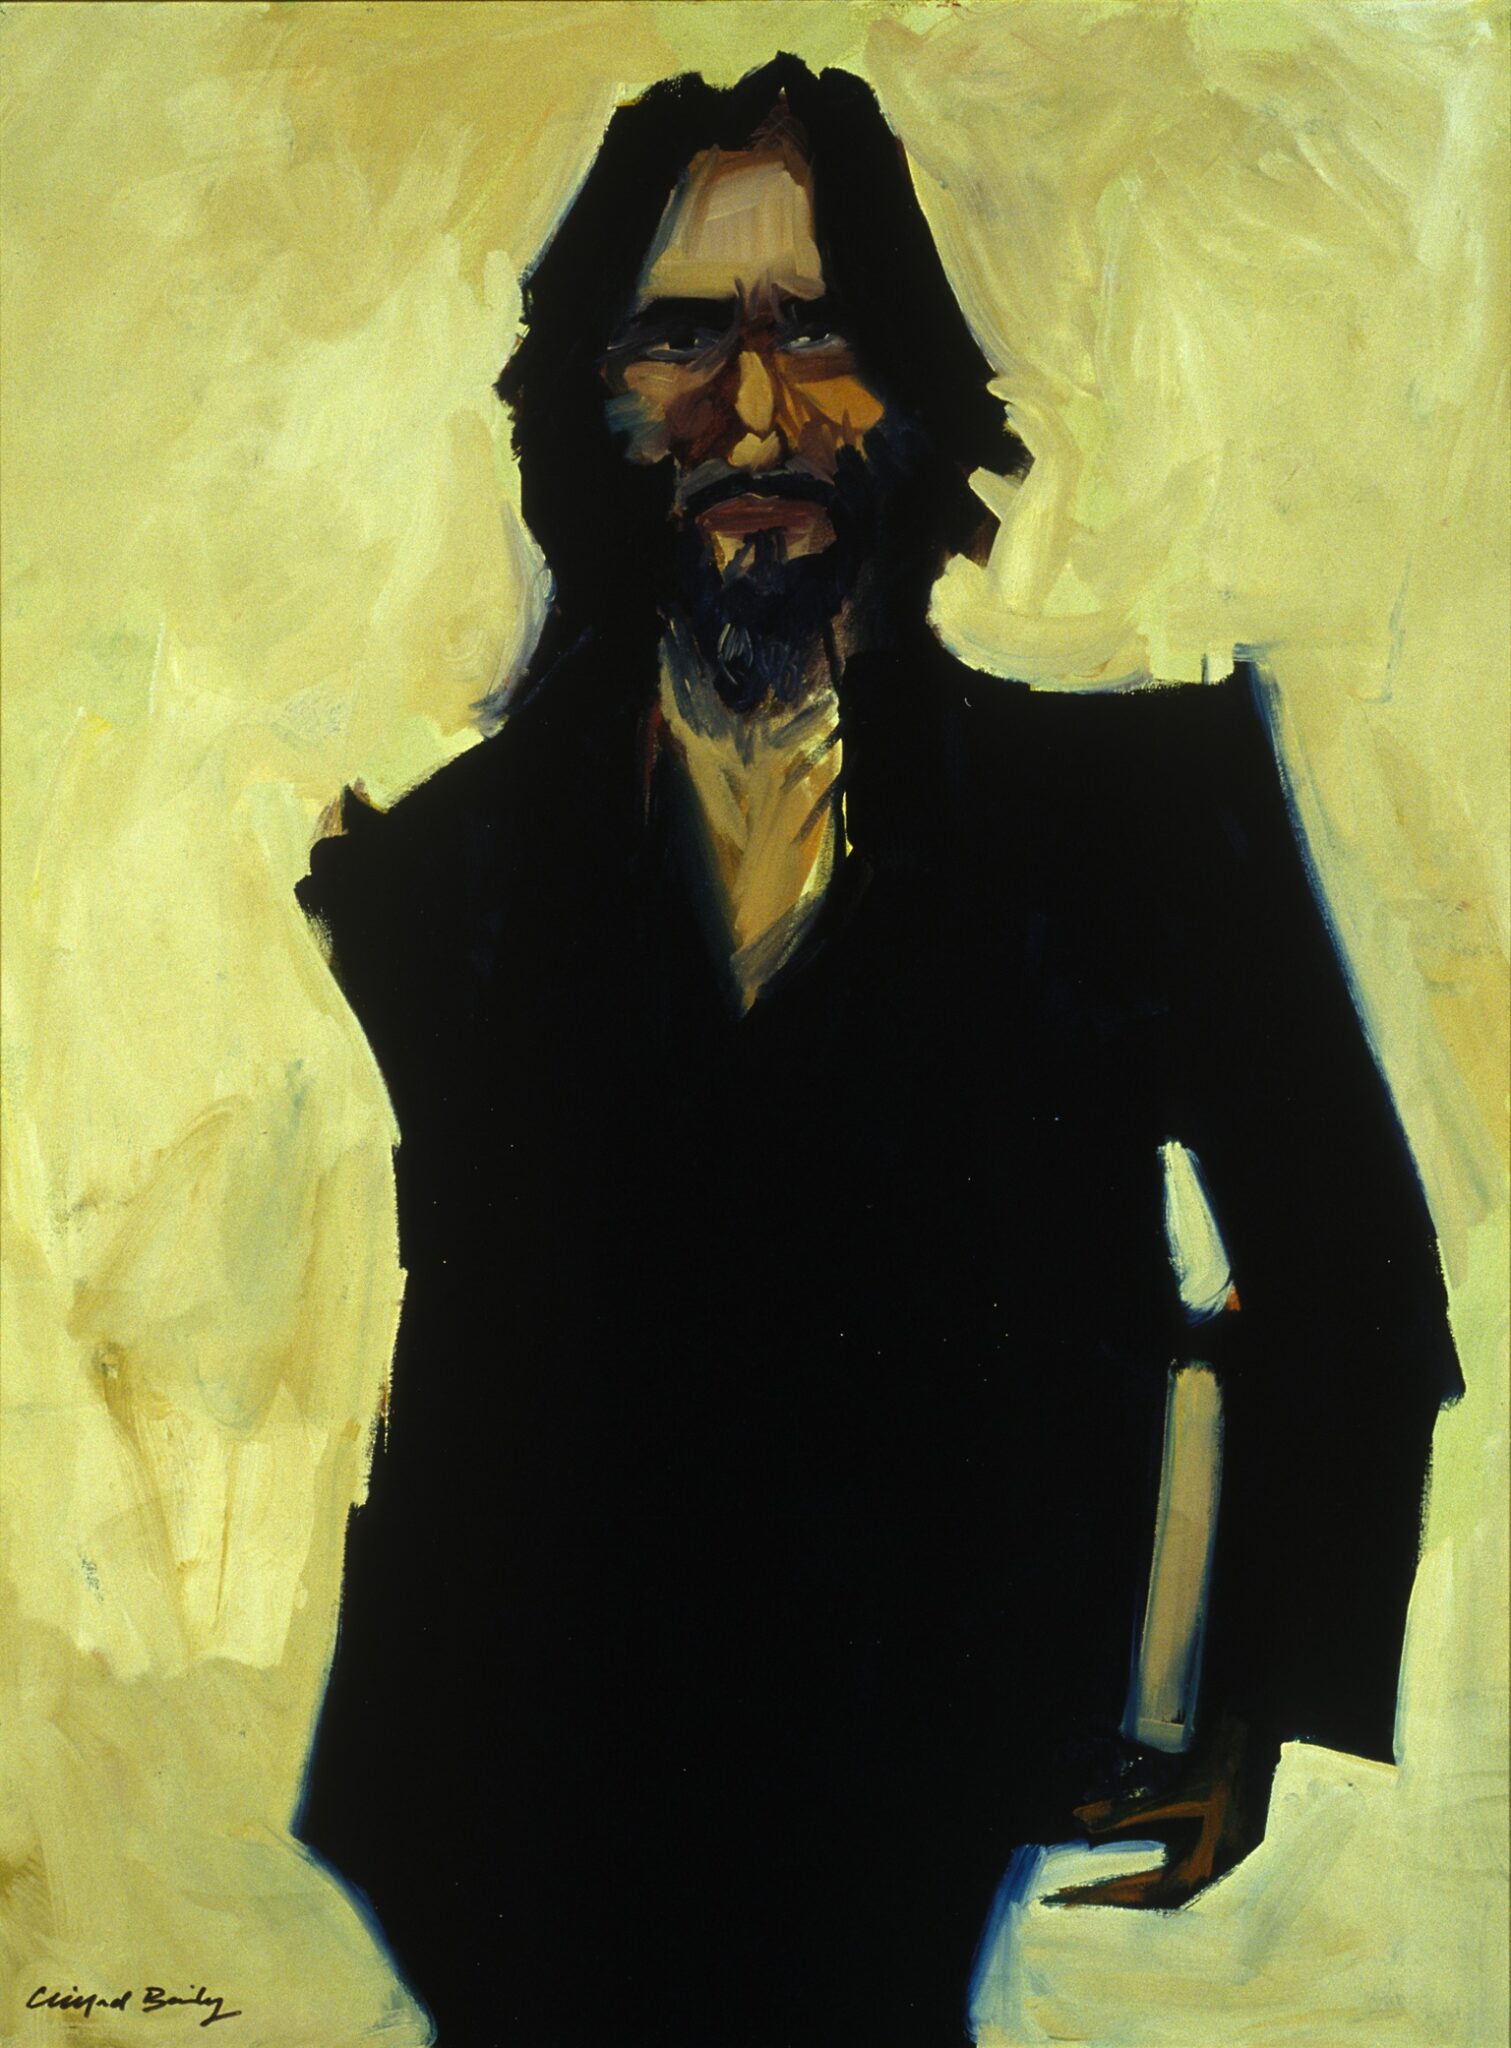 Self Portrait (2006) by Clifford Bailey